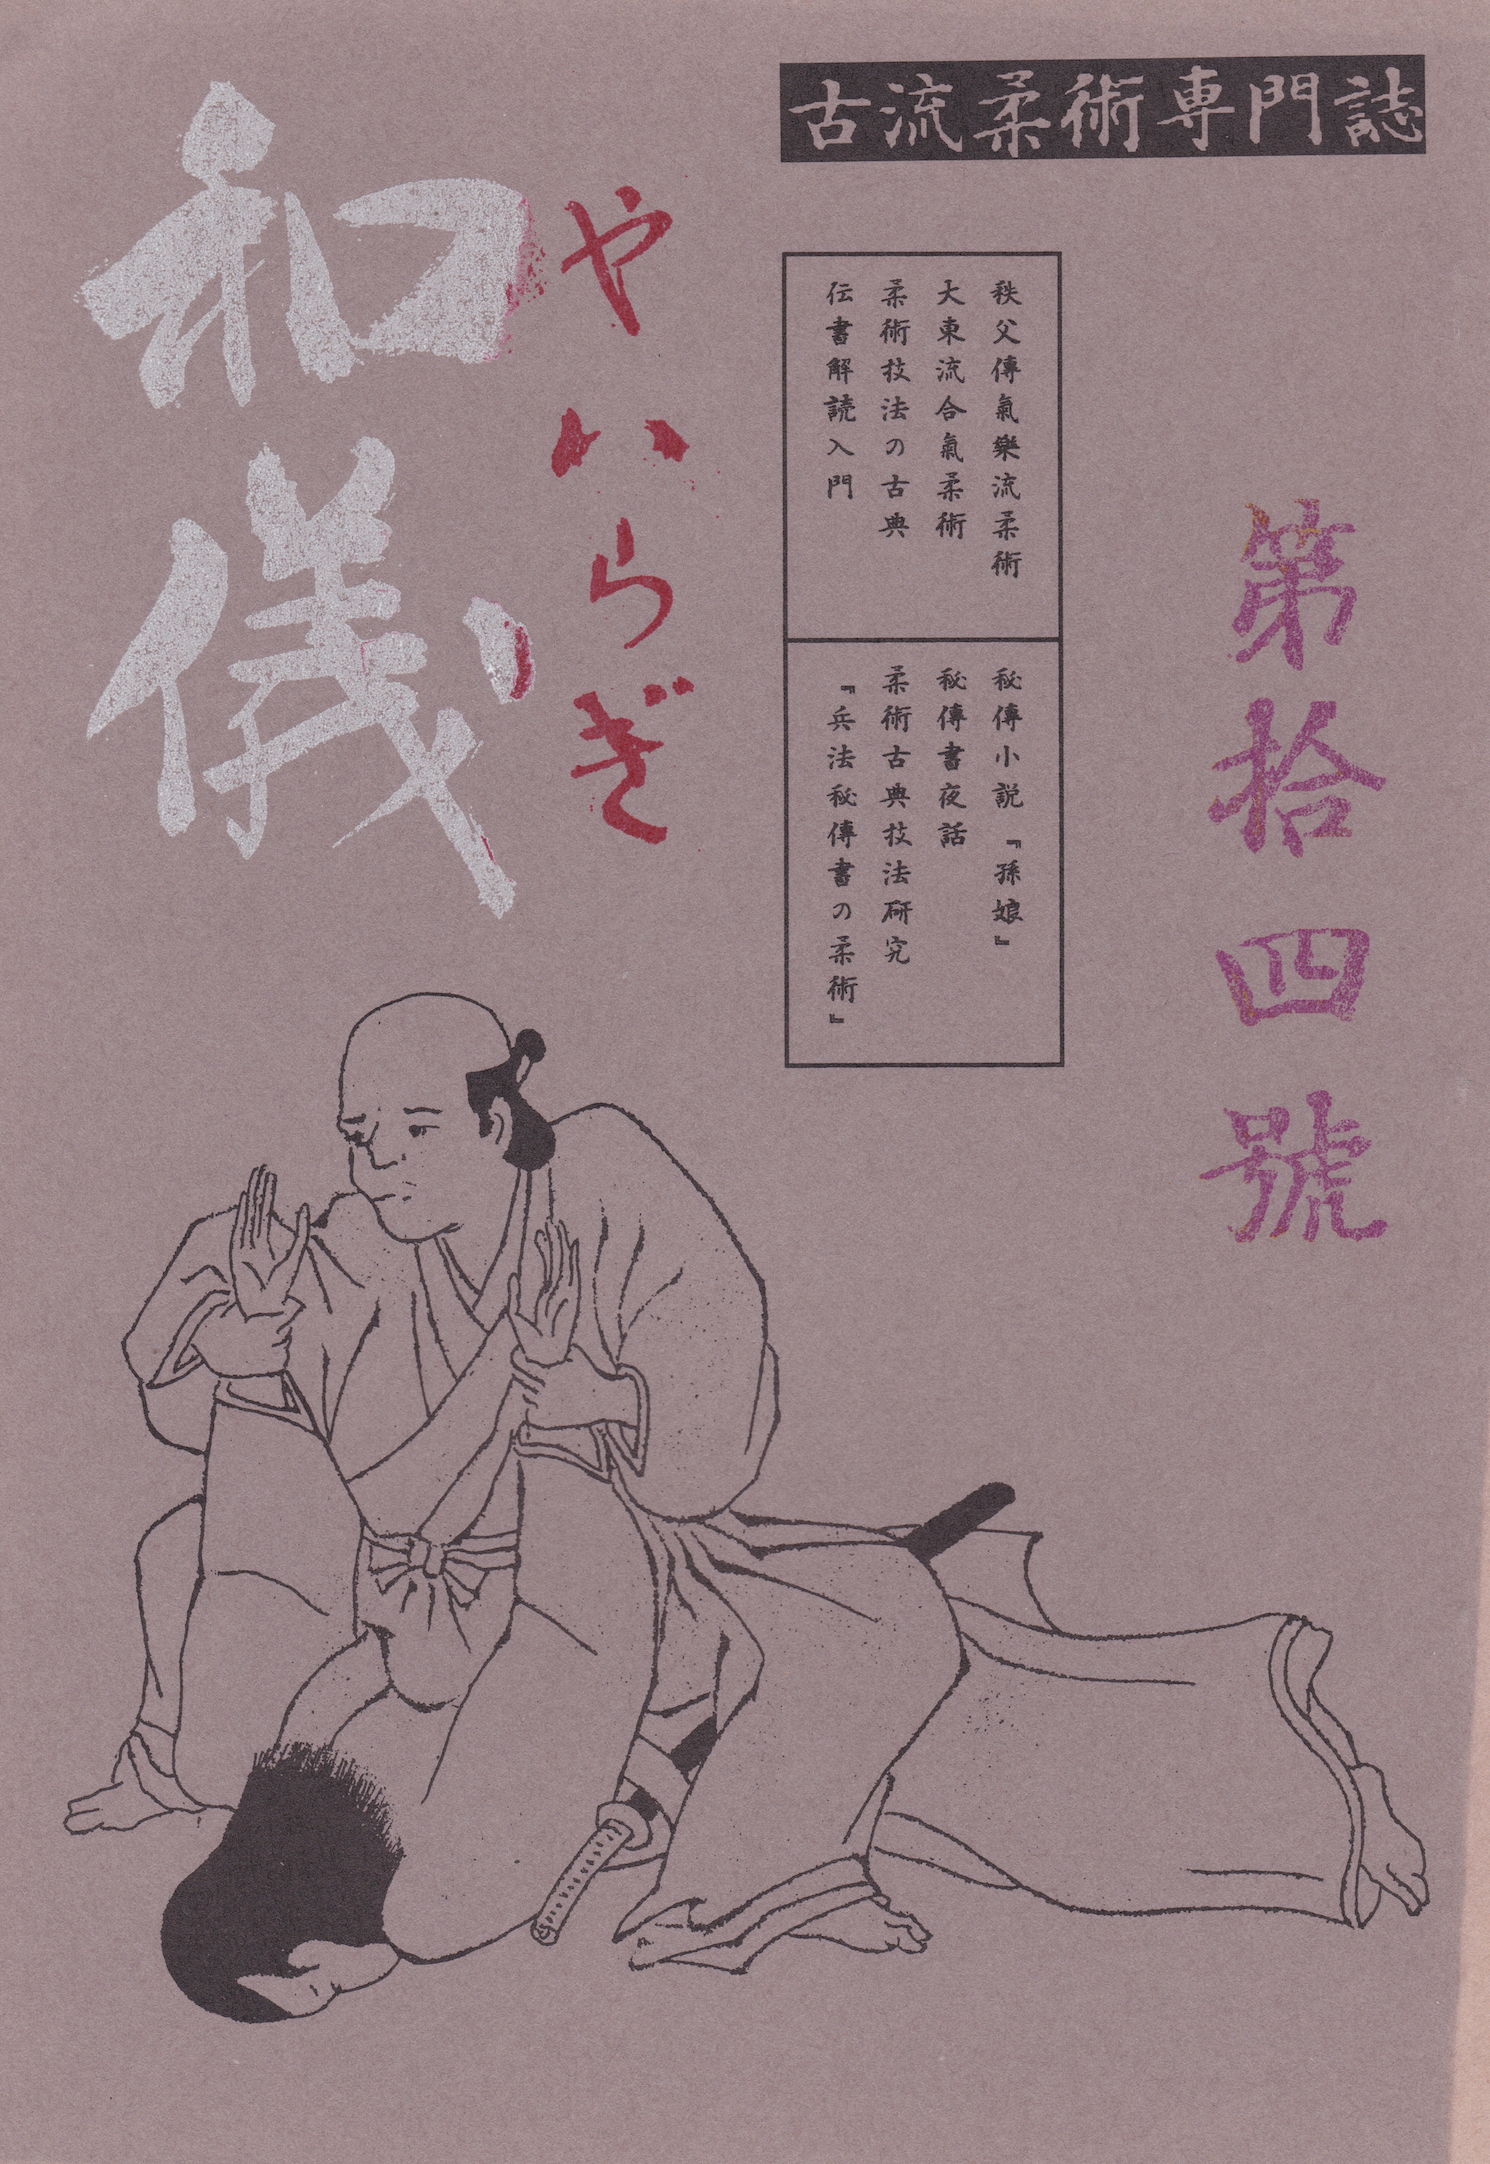 Yairagi Koryu Jujutsu Research Journal #14 (Preowned)